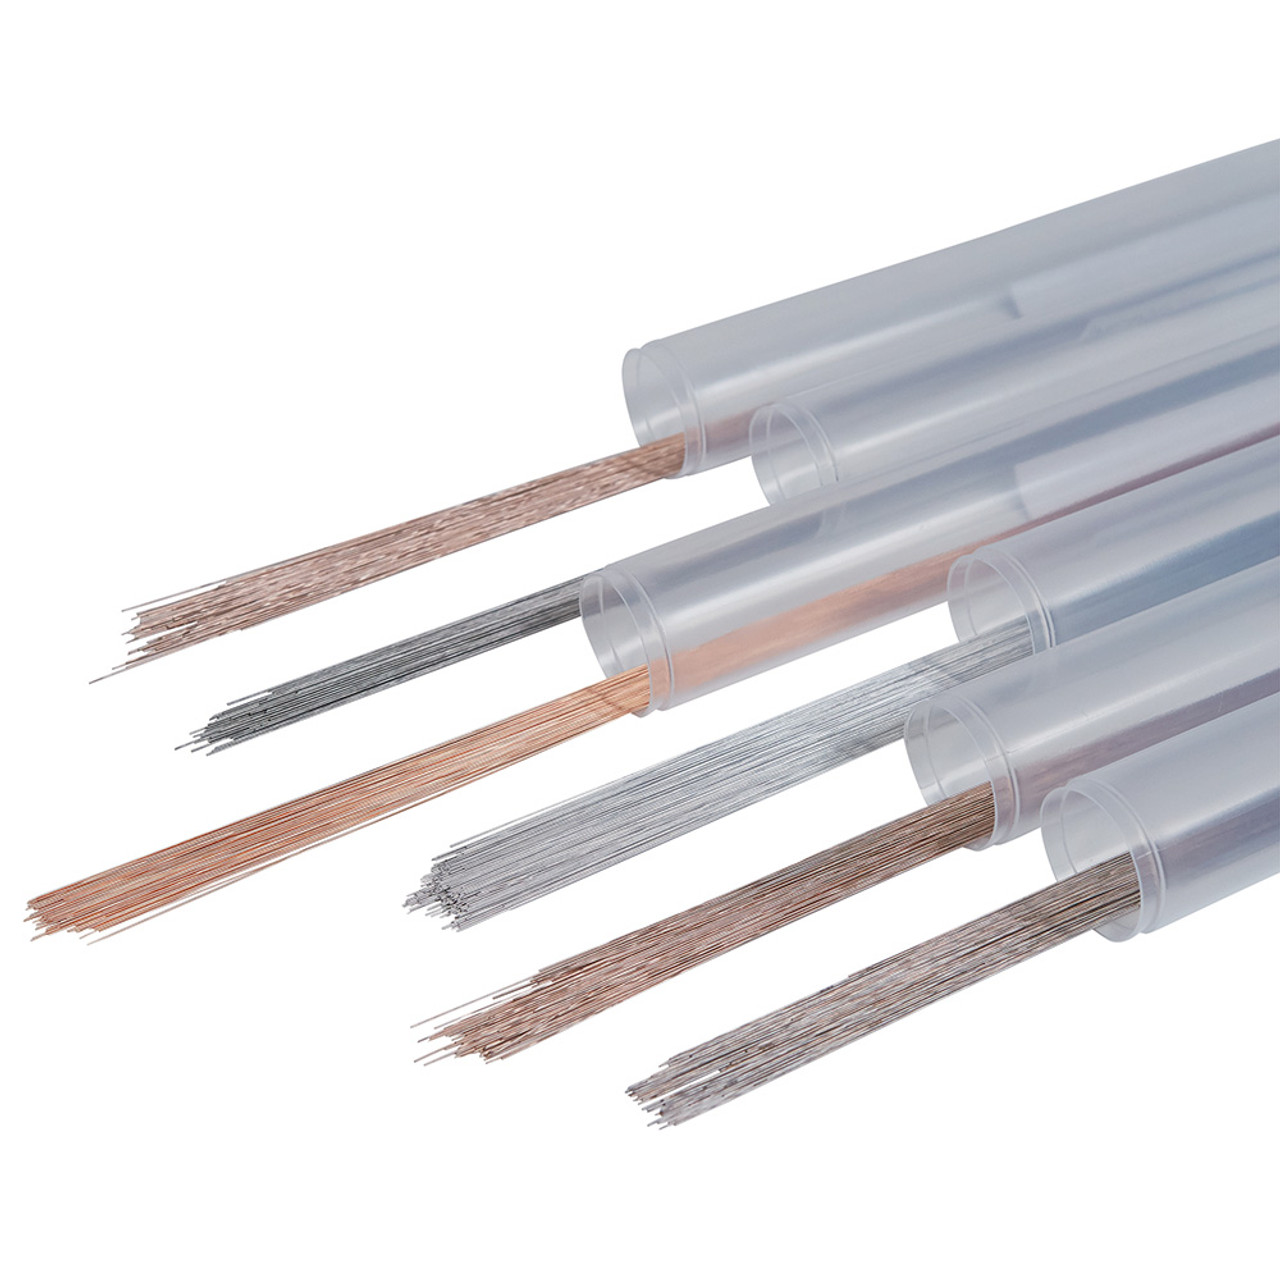 Laser Welding Wires - BECU, 0.5mm pkg. of 25 grams = approx. 44 wires